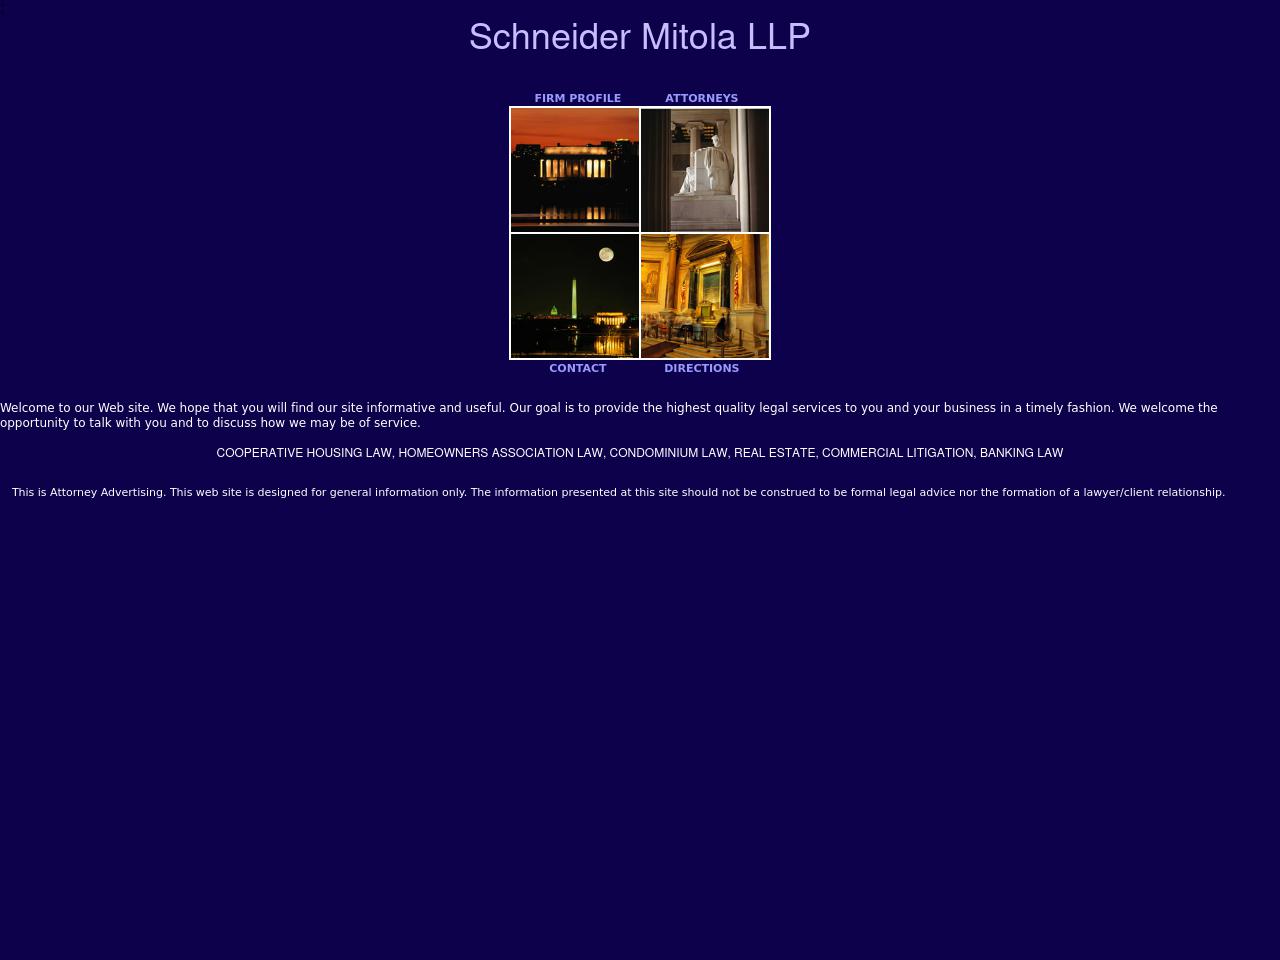 Schneider Mitola LLP - Garden City NY Lawyers